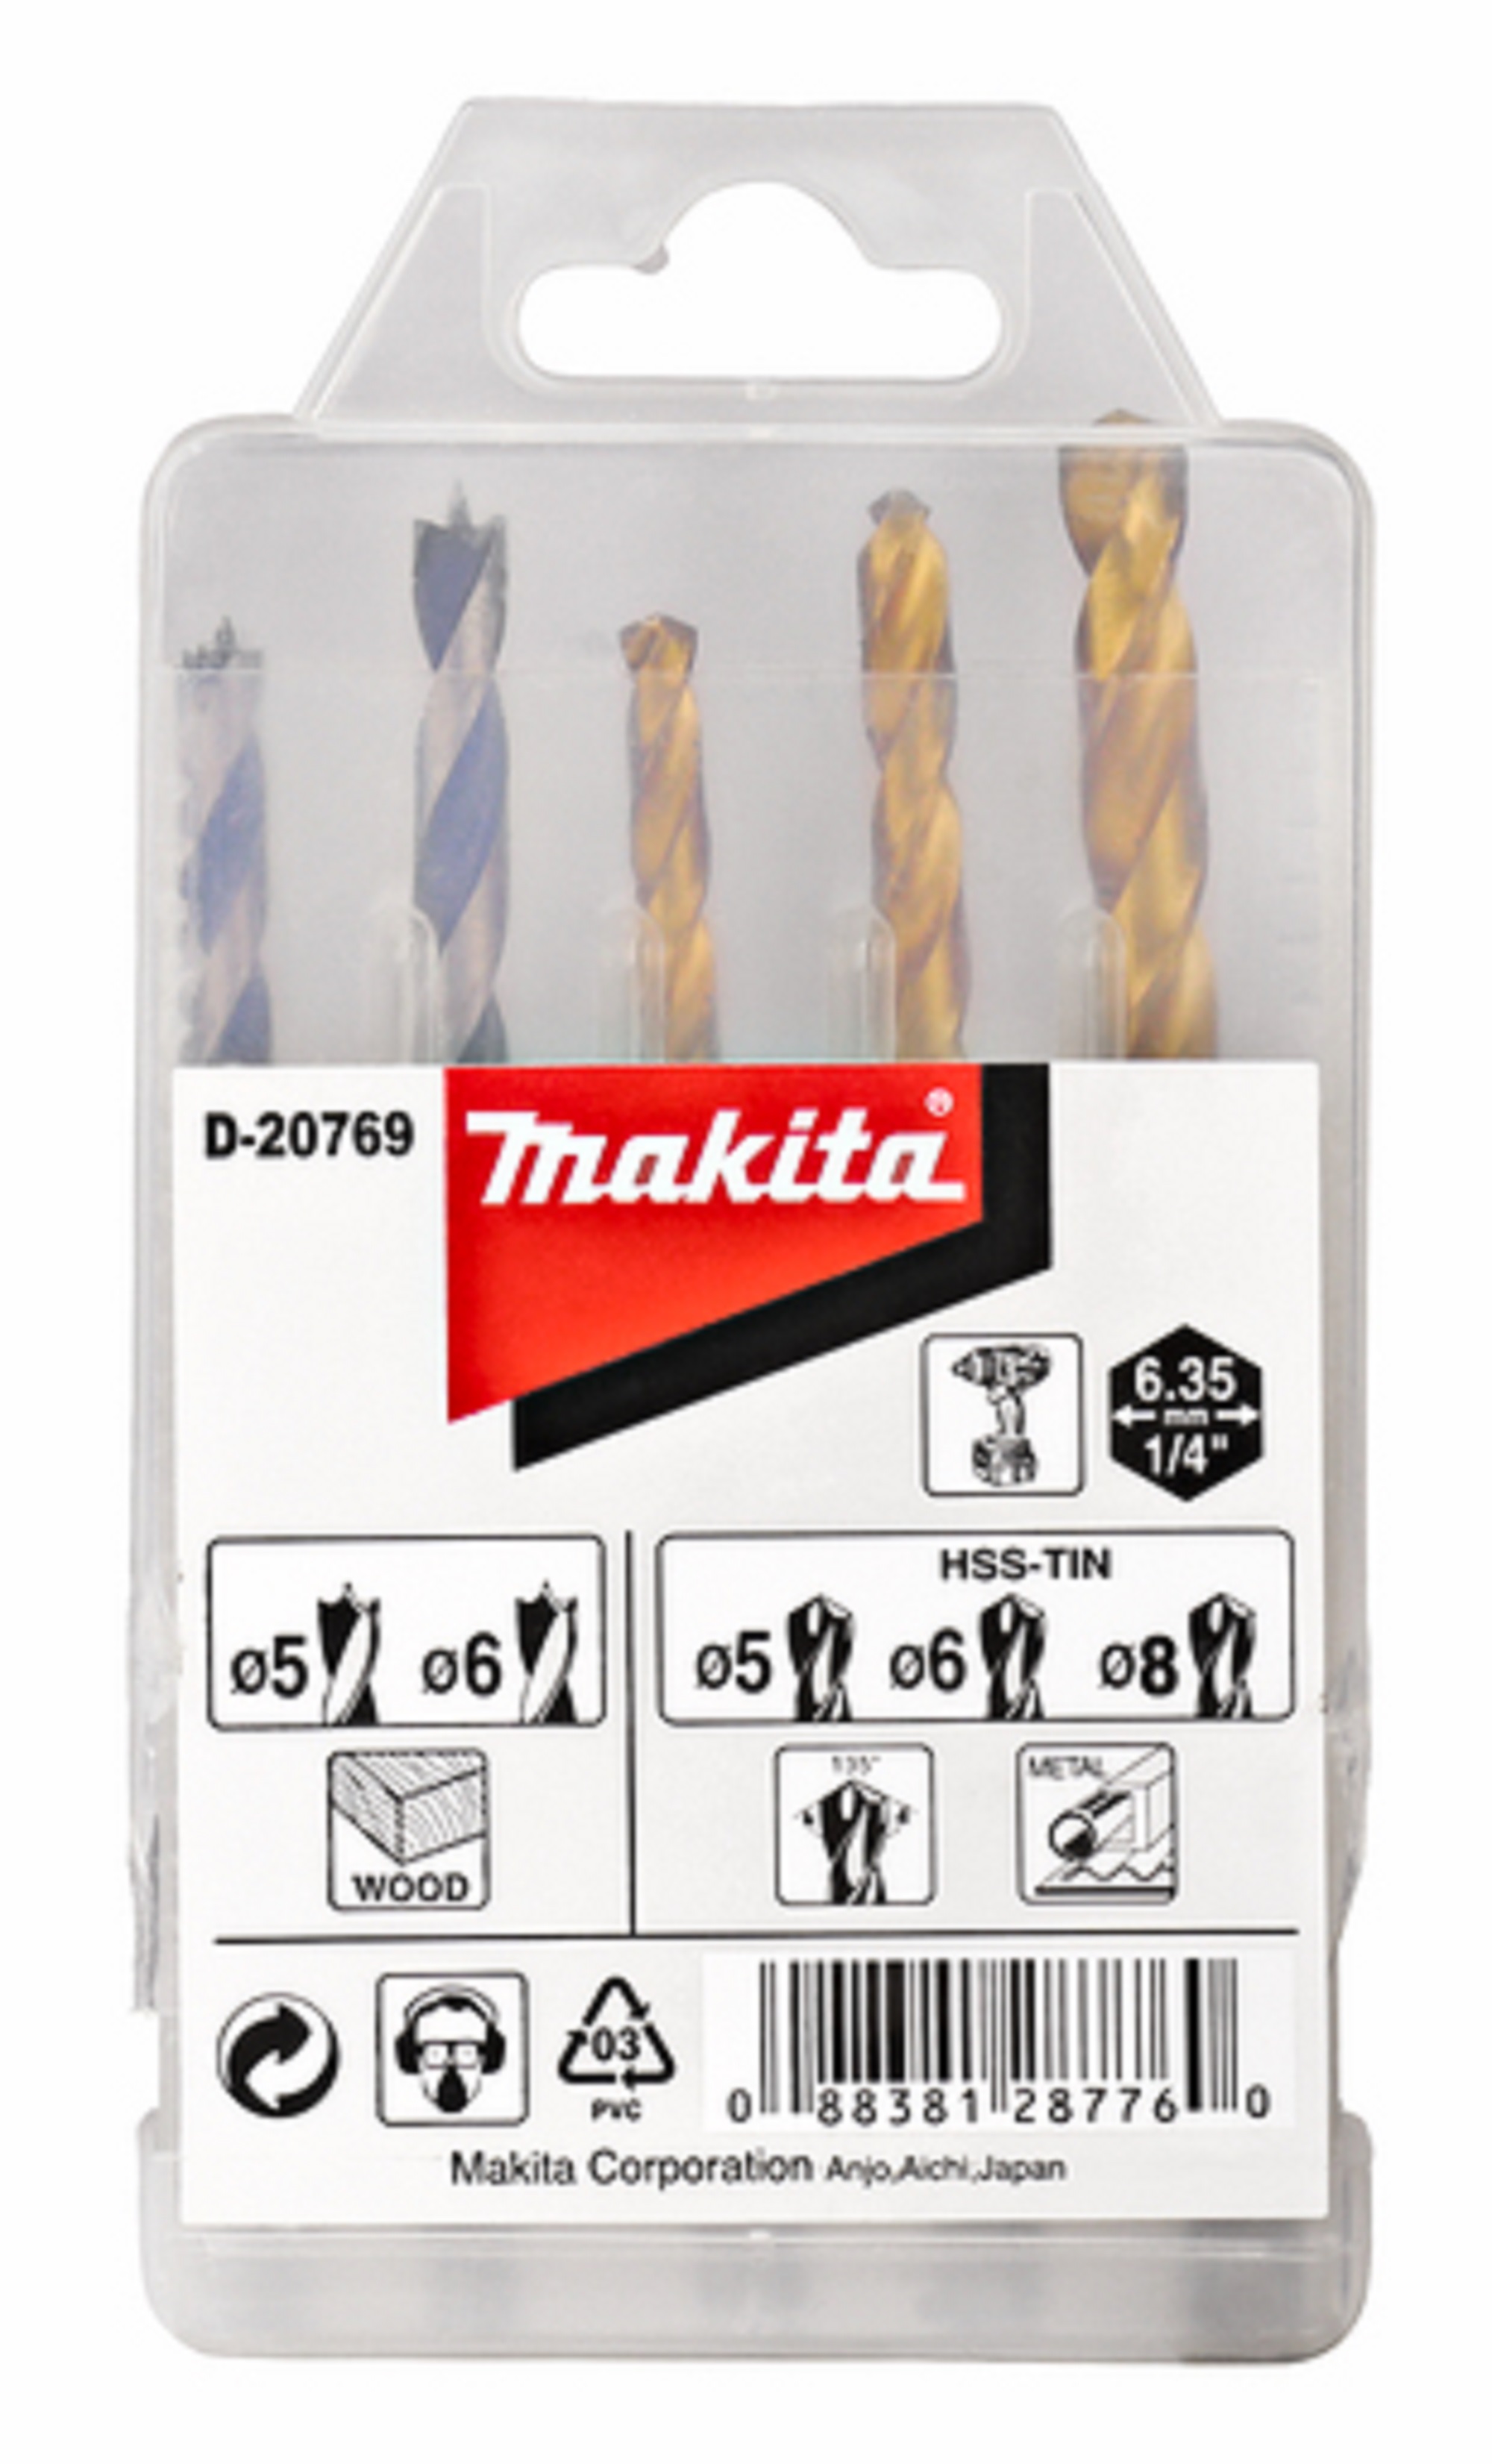 Makita borenset 5-delig hout en metaal - D-20769